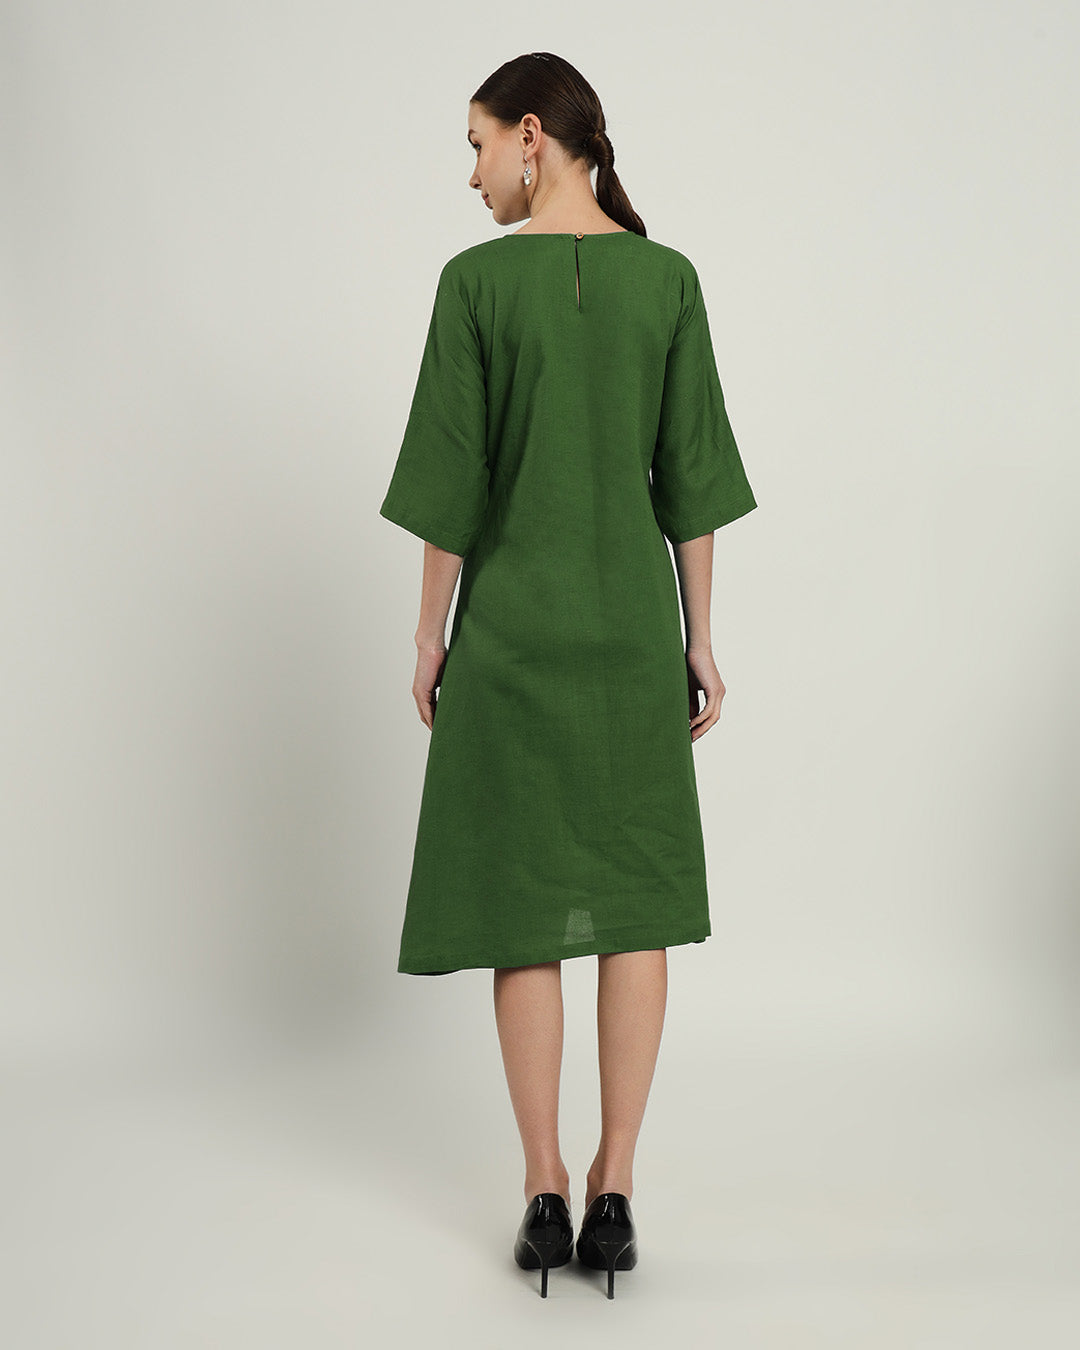 The Monrovia Emerald Cotton Dress